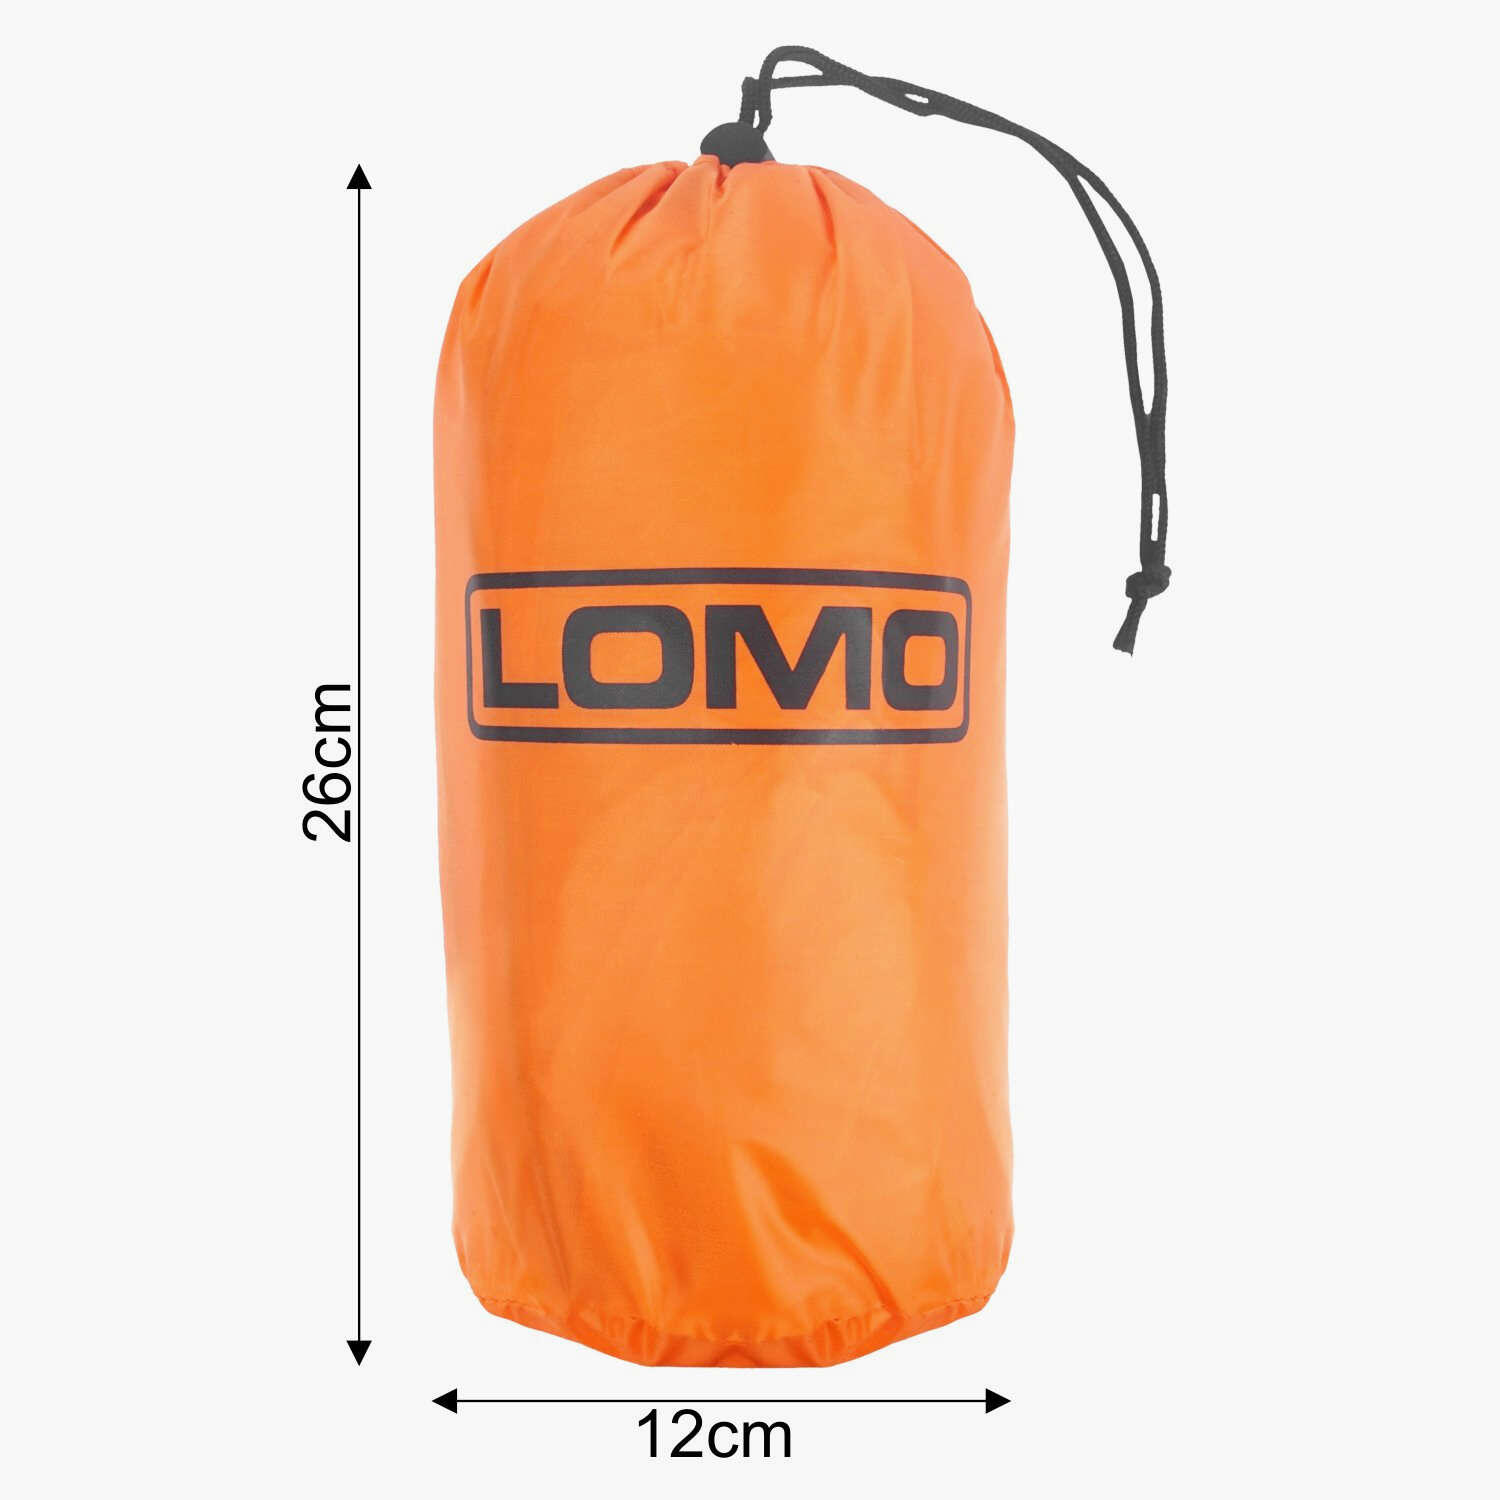 Lomo Emergency Storm Shelter. 4-5 Person Group Bothy Bag 4/6